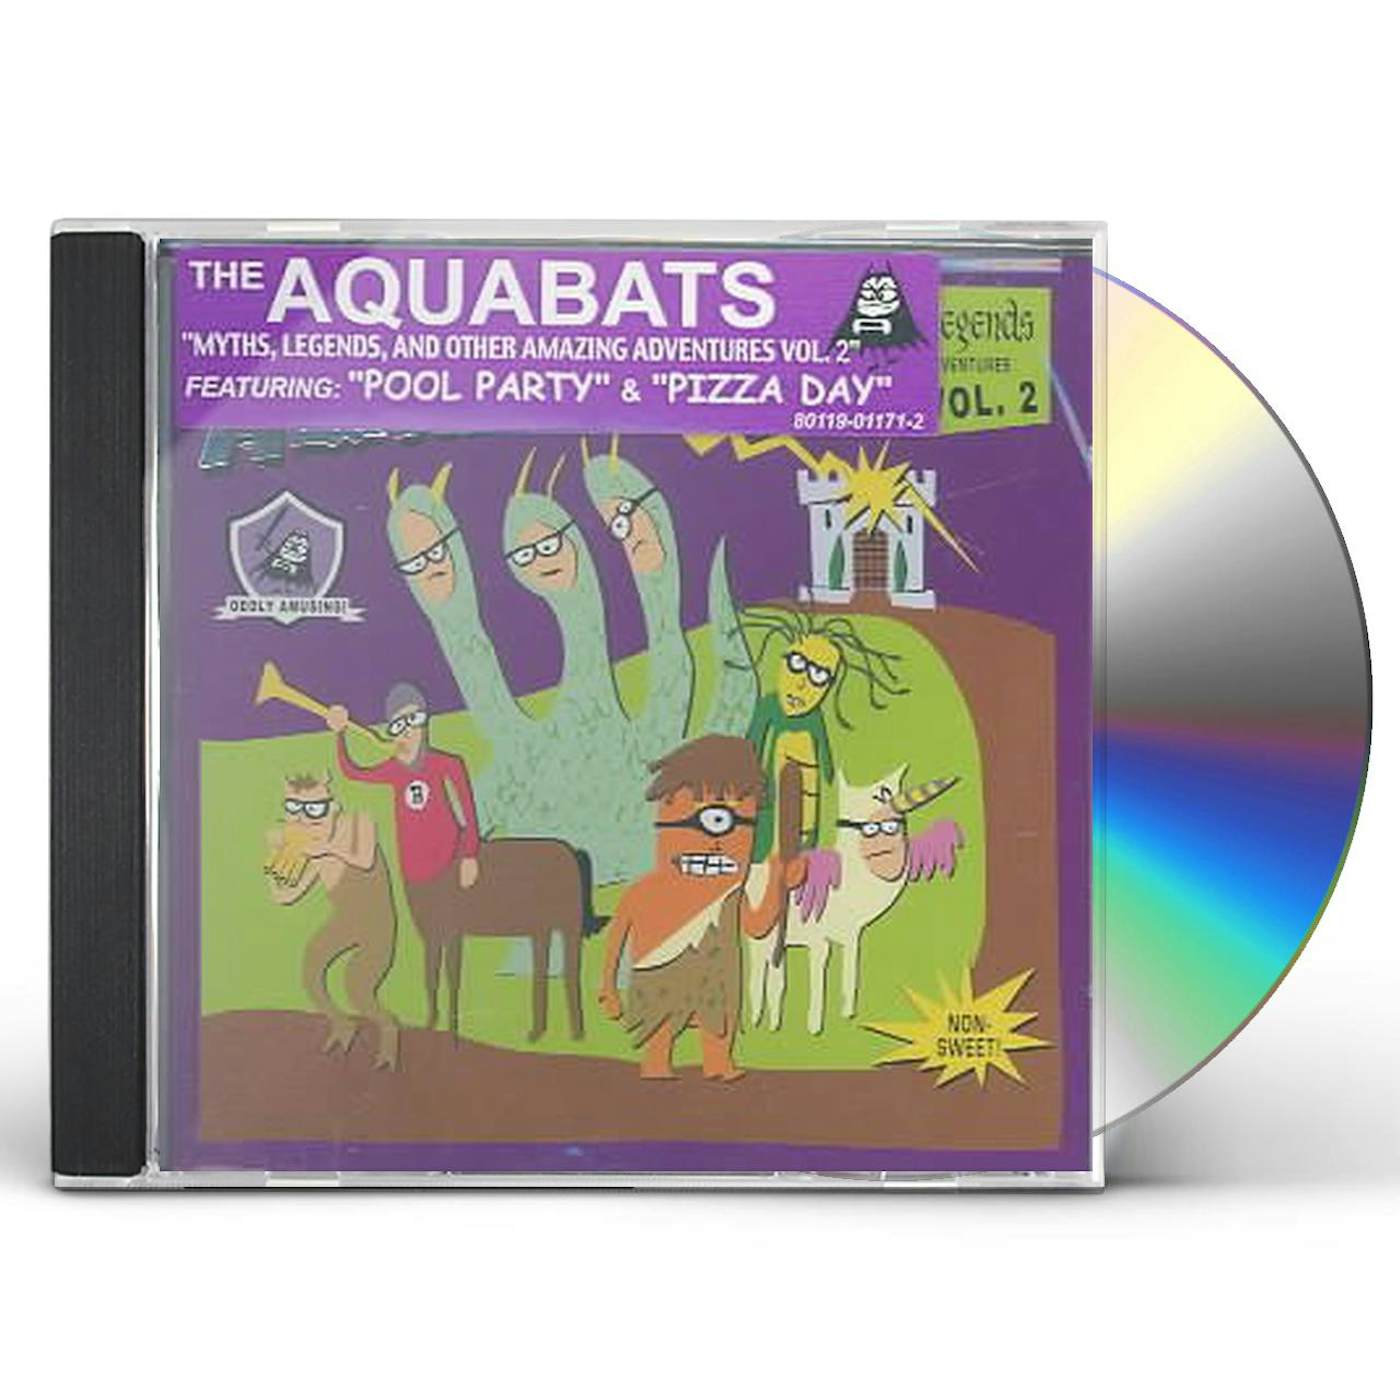 The Aquabats! Myths, Legends and Other Amazing Adventures Vol. 2 CD